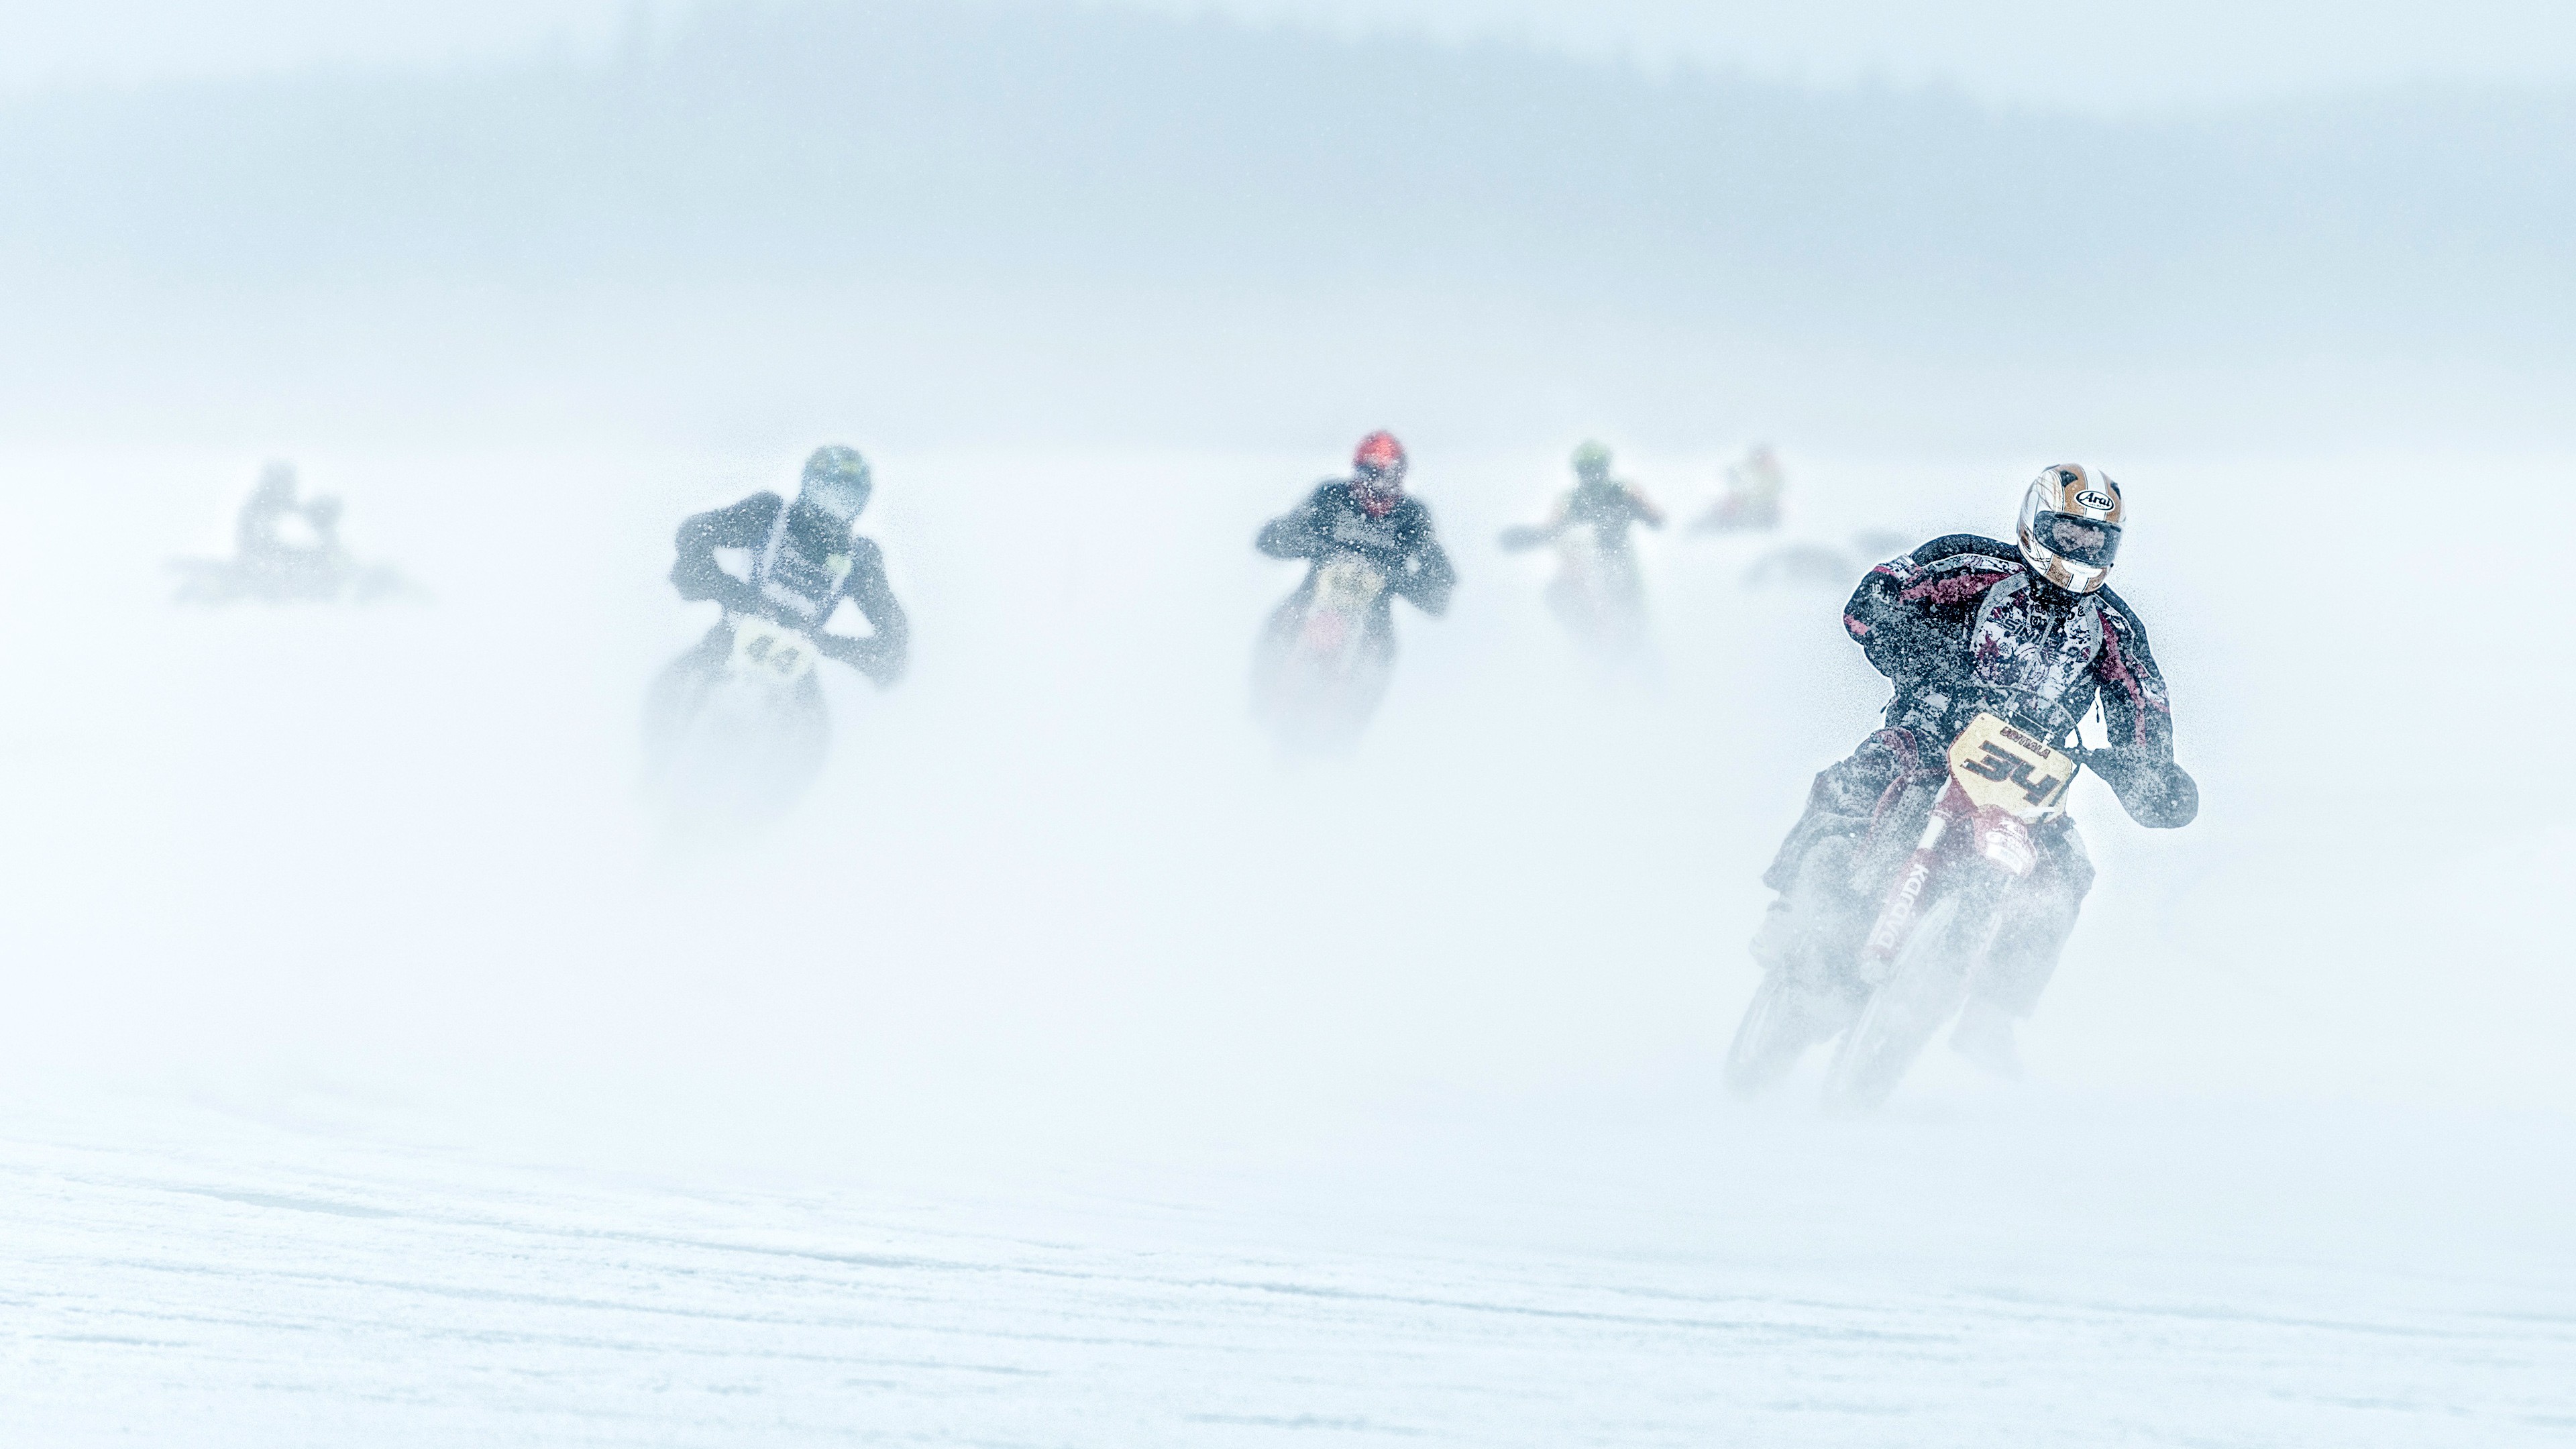 Course de motos cross dans la neige.jpg